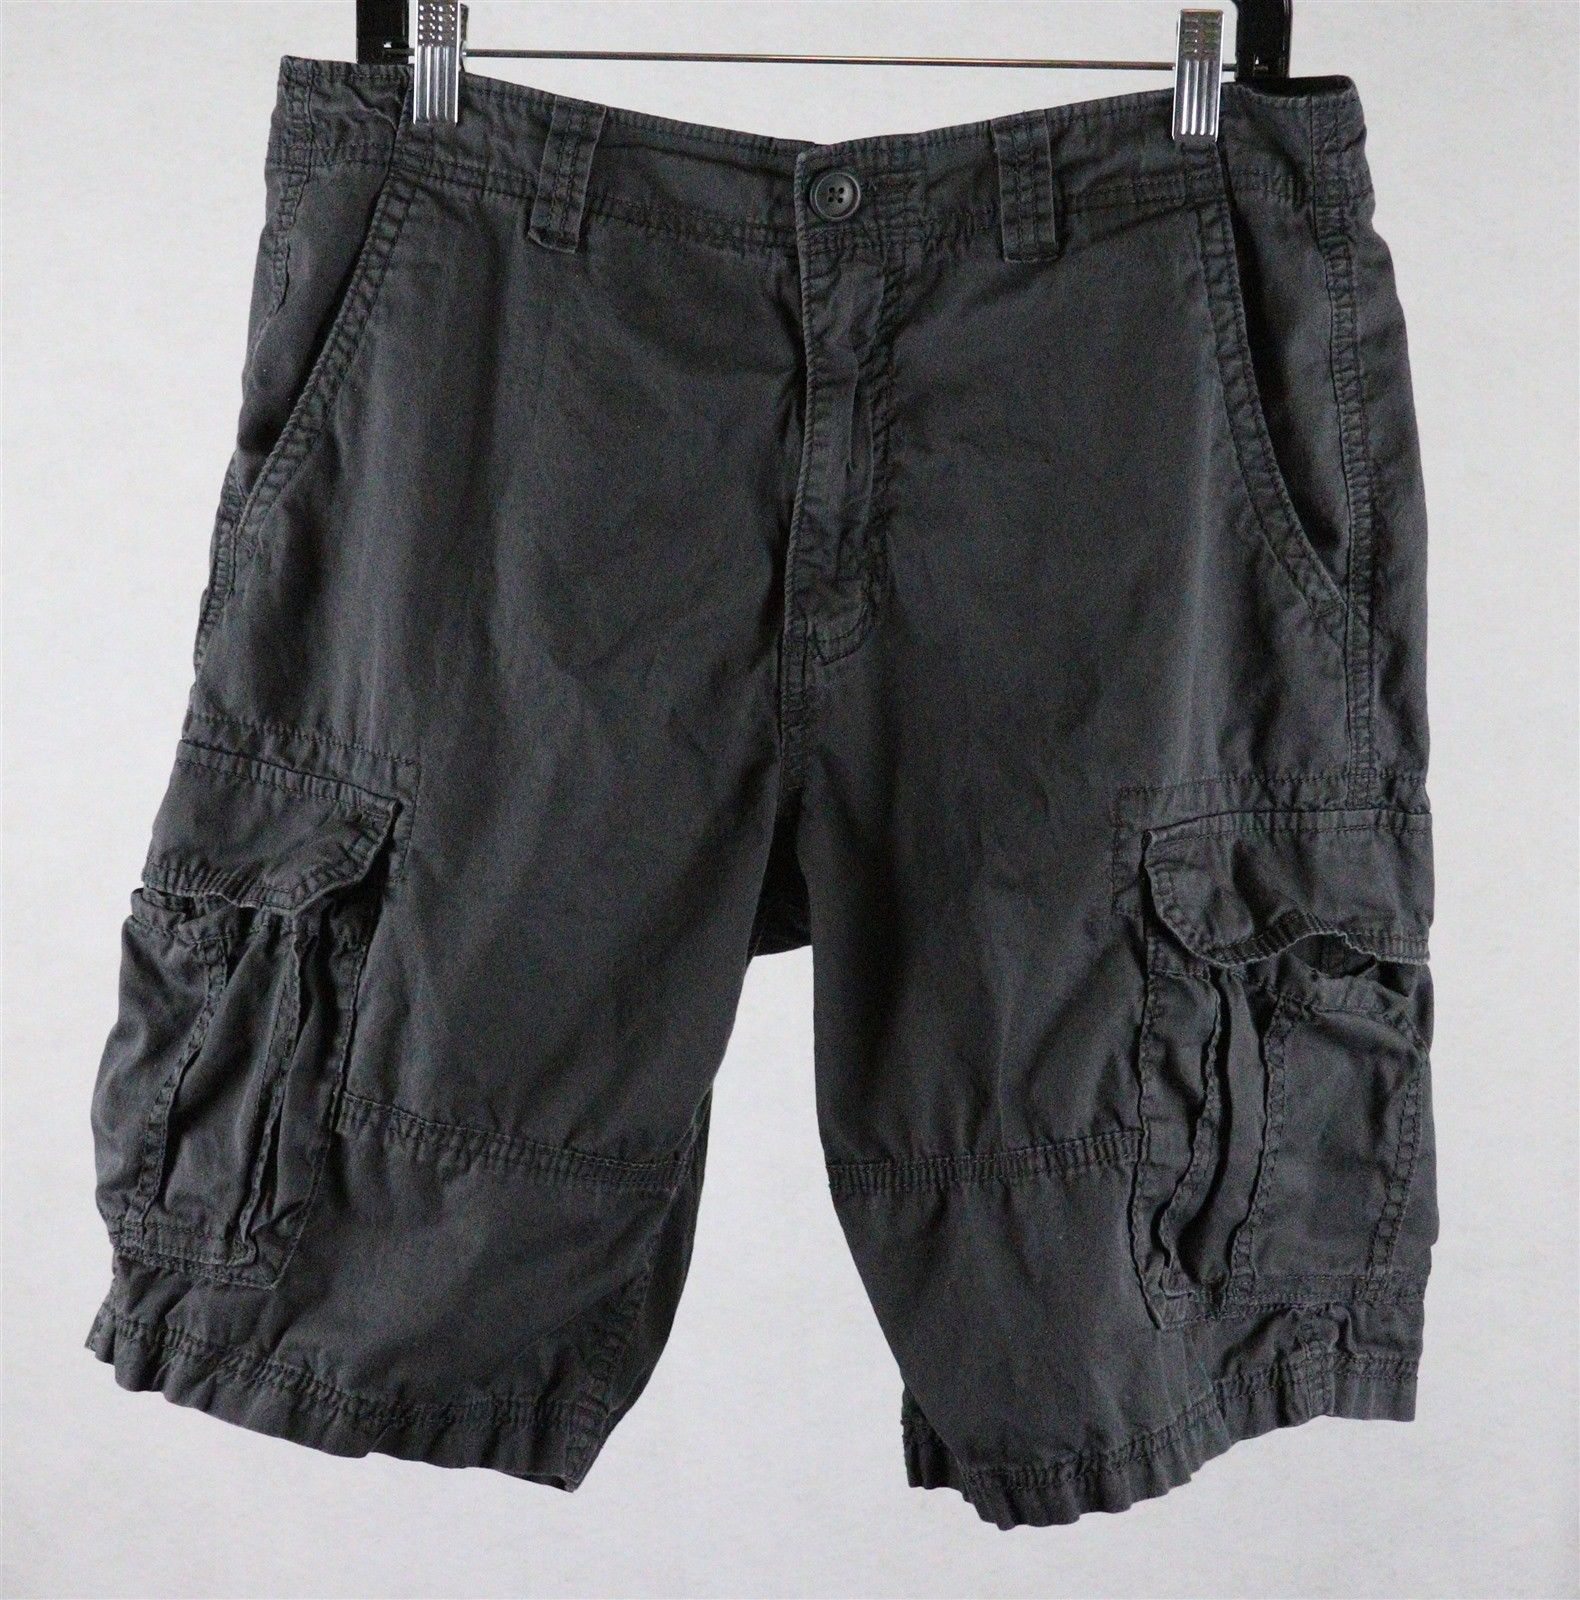 Old Navy Mens Cargo Shorts Tag Size 33, Measures 33 x 10 - Shorts